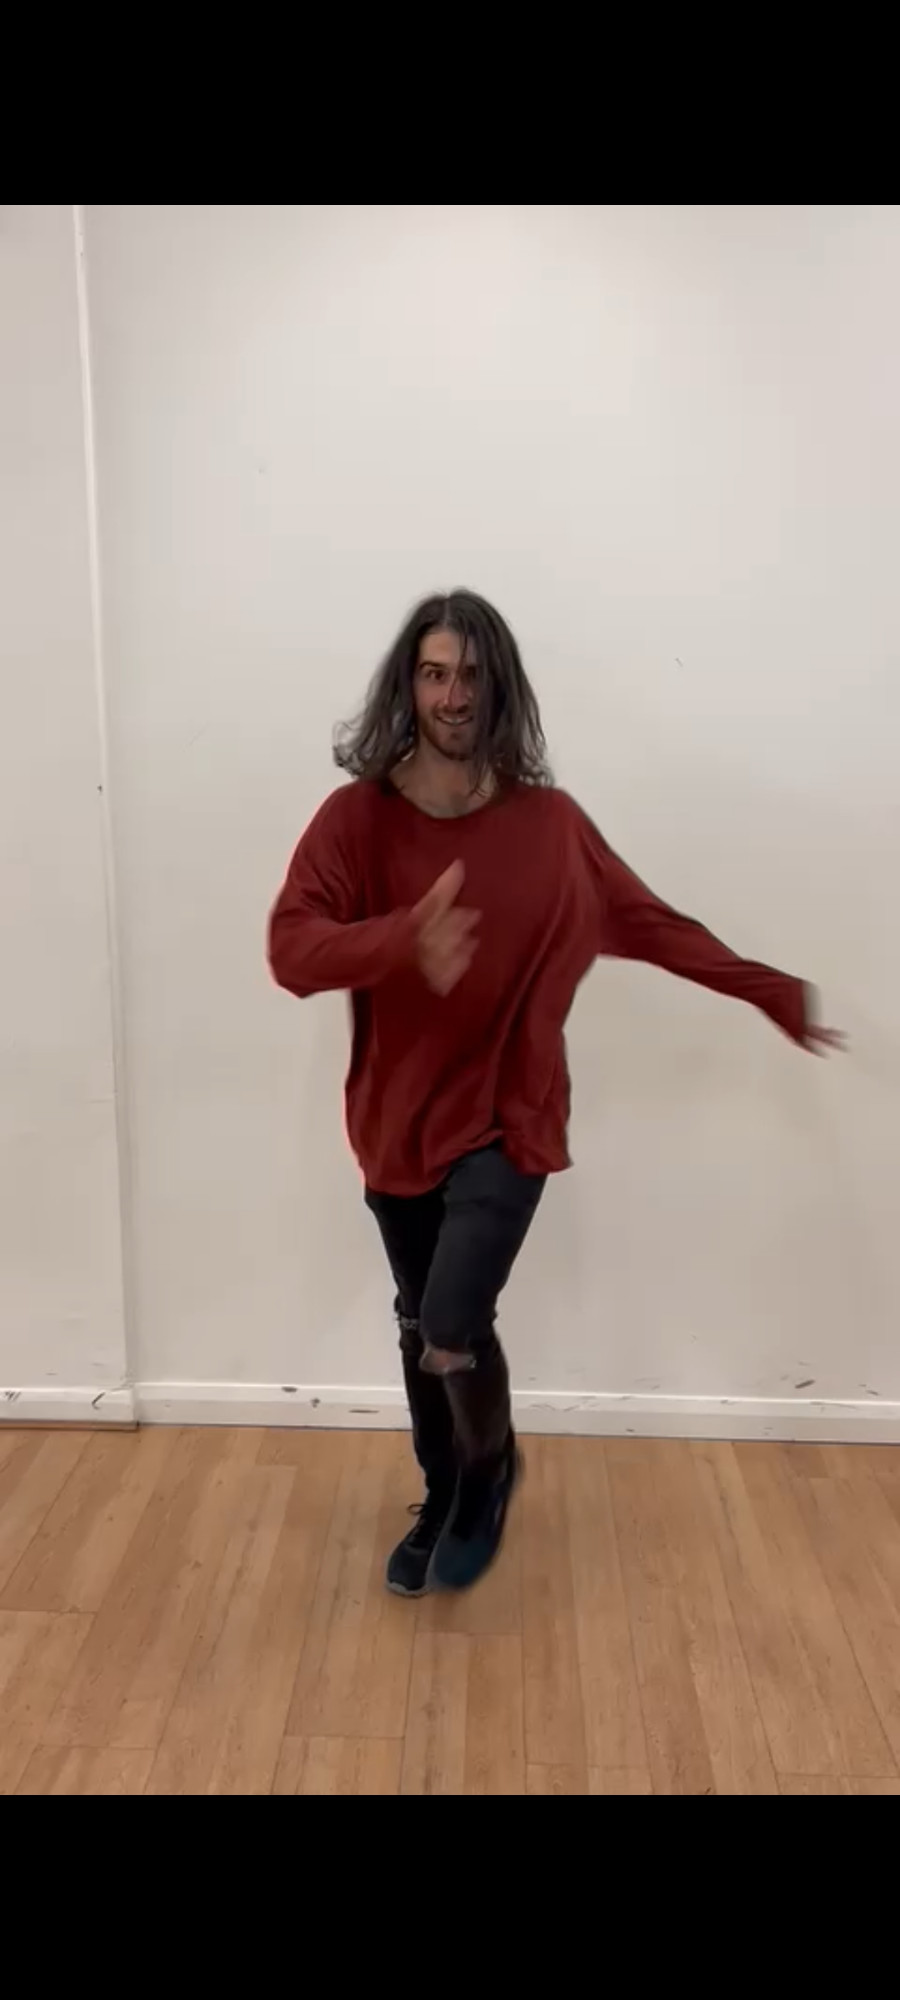 Enzo dancing – Enzo performing a samba coreography